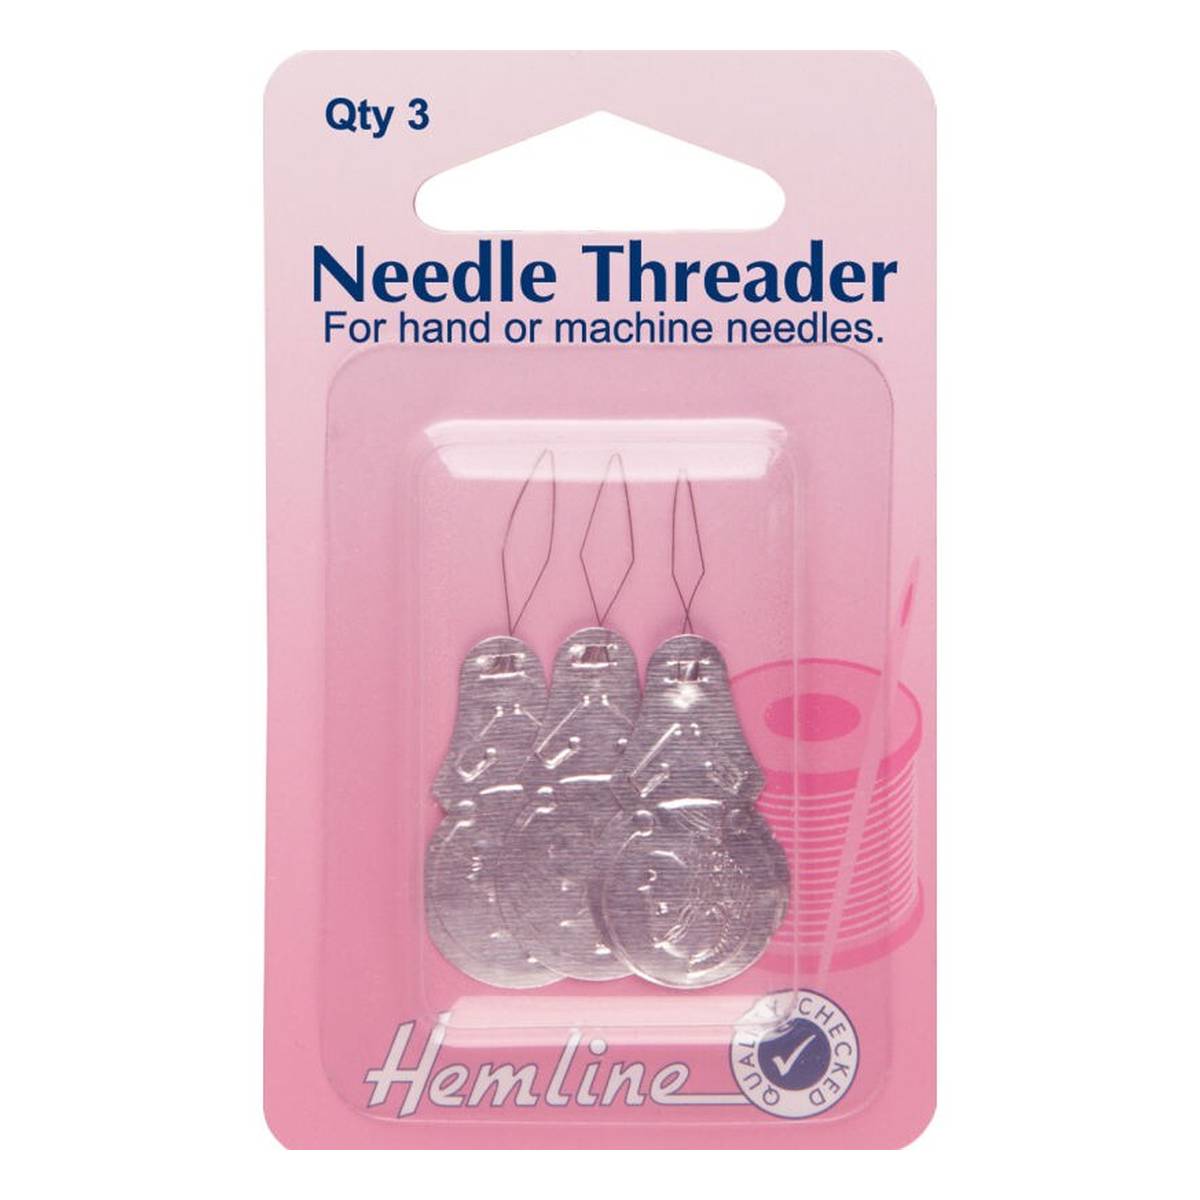 Do You Love Your Needle Threader?